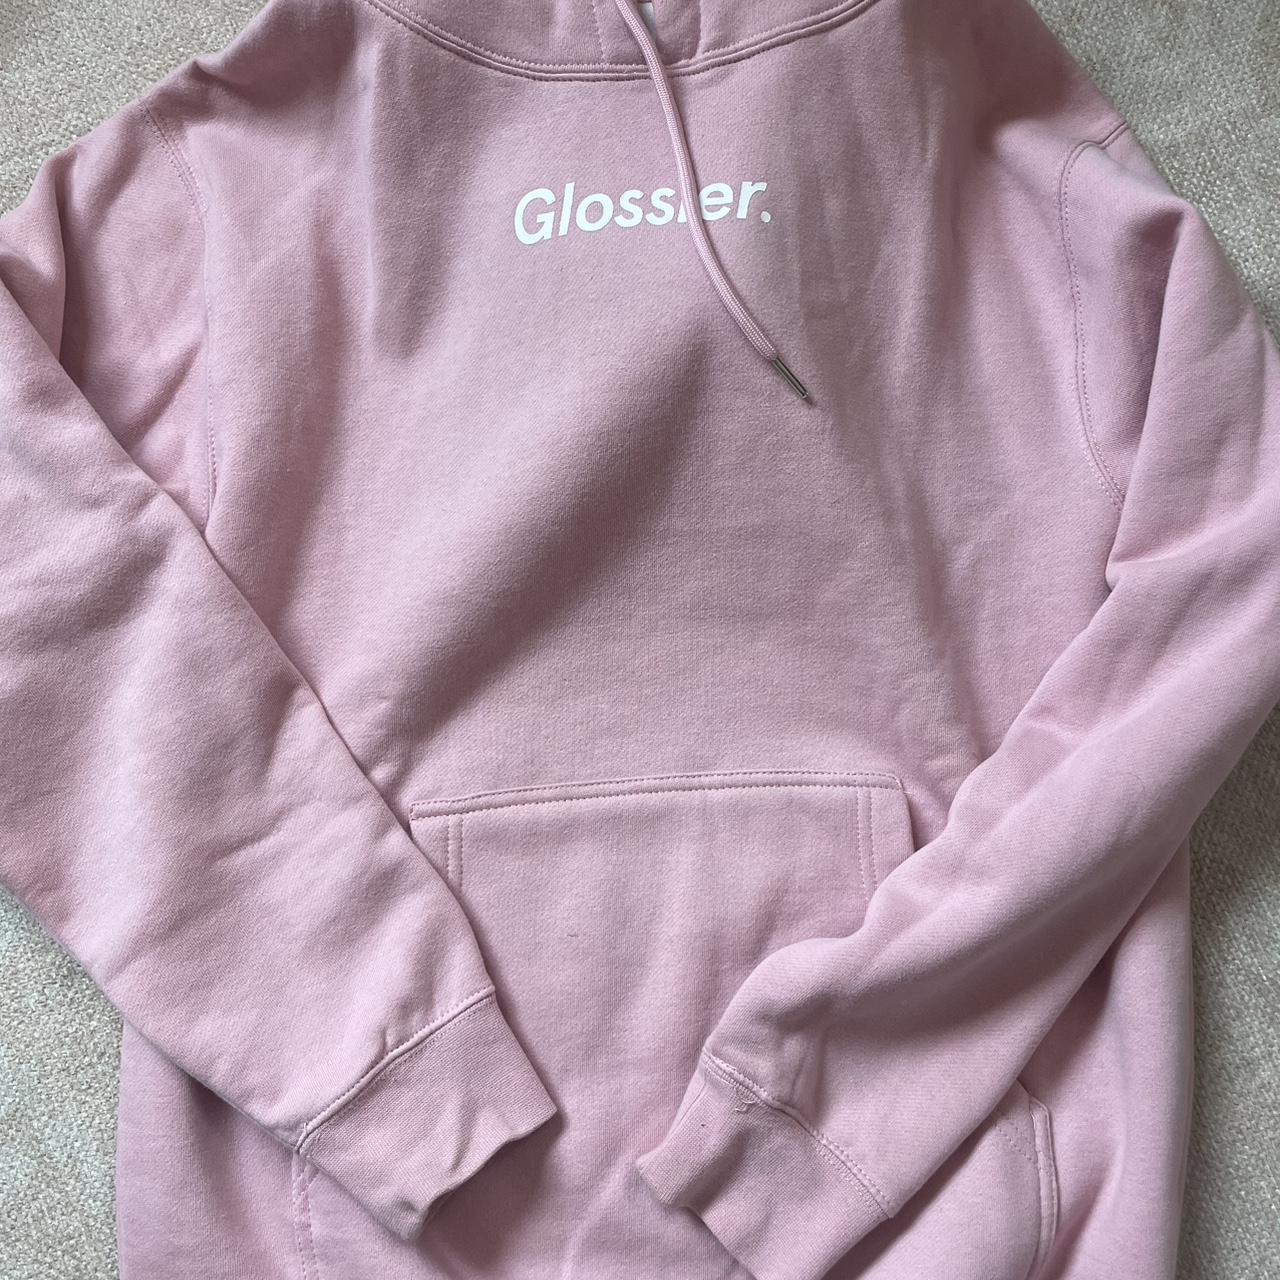 Glossier Women's Pink Sweatshirt (2)